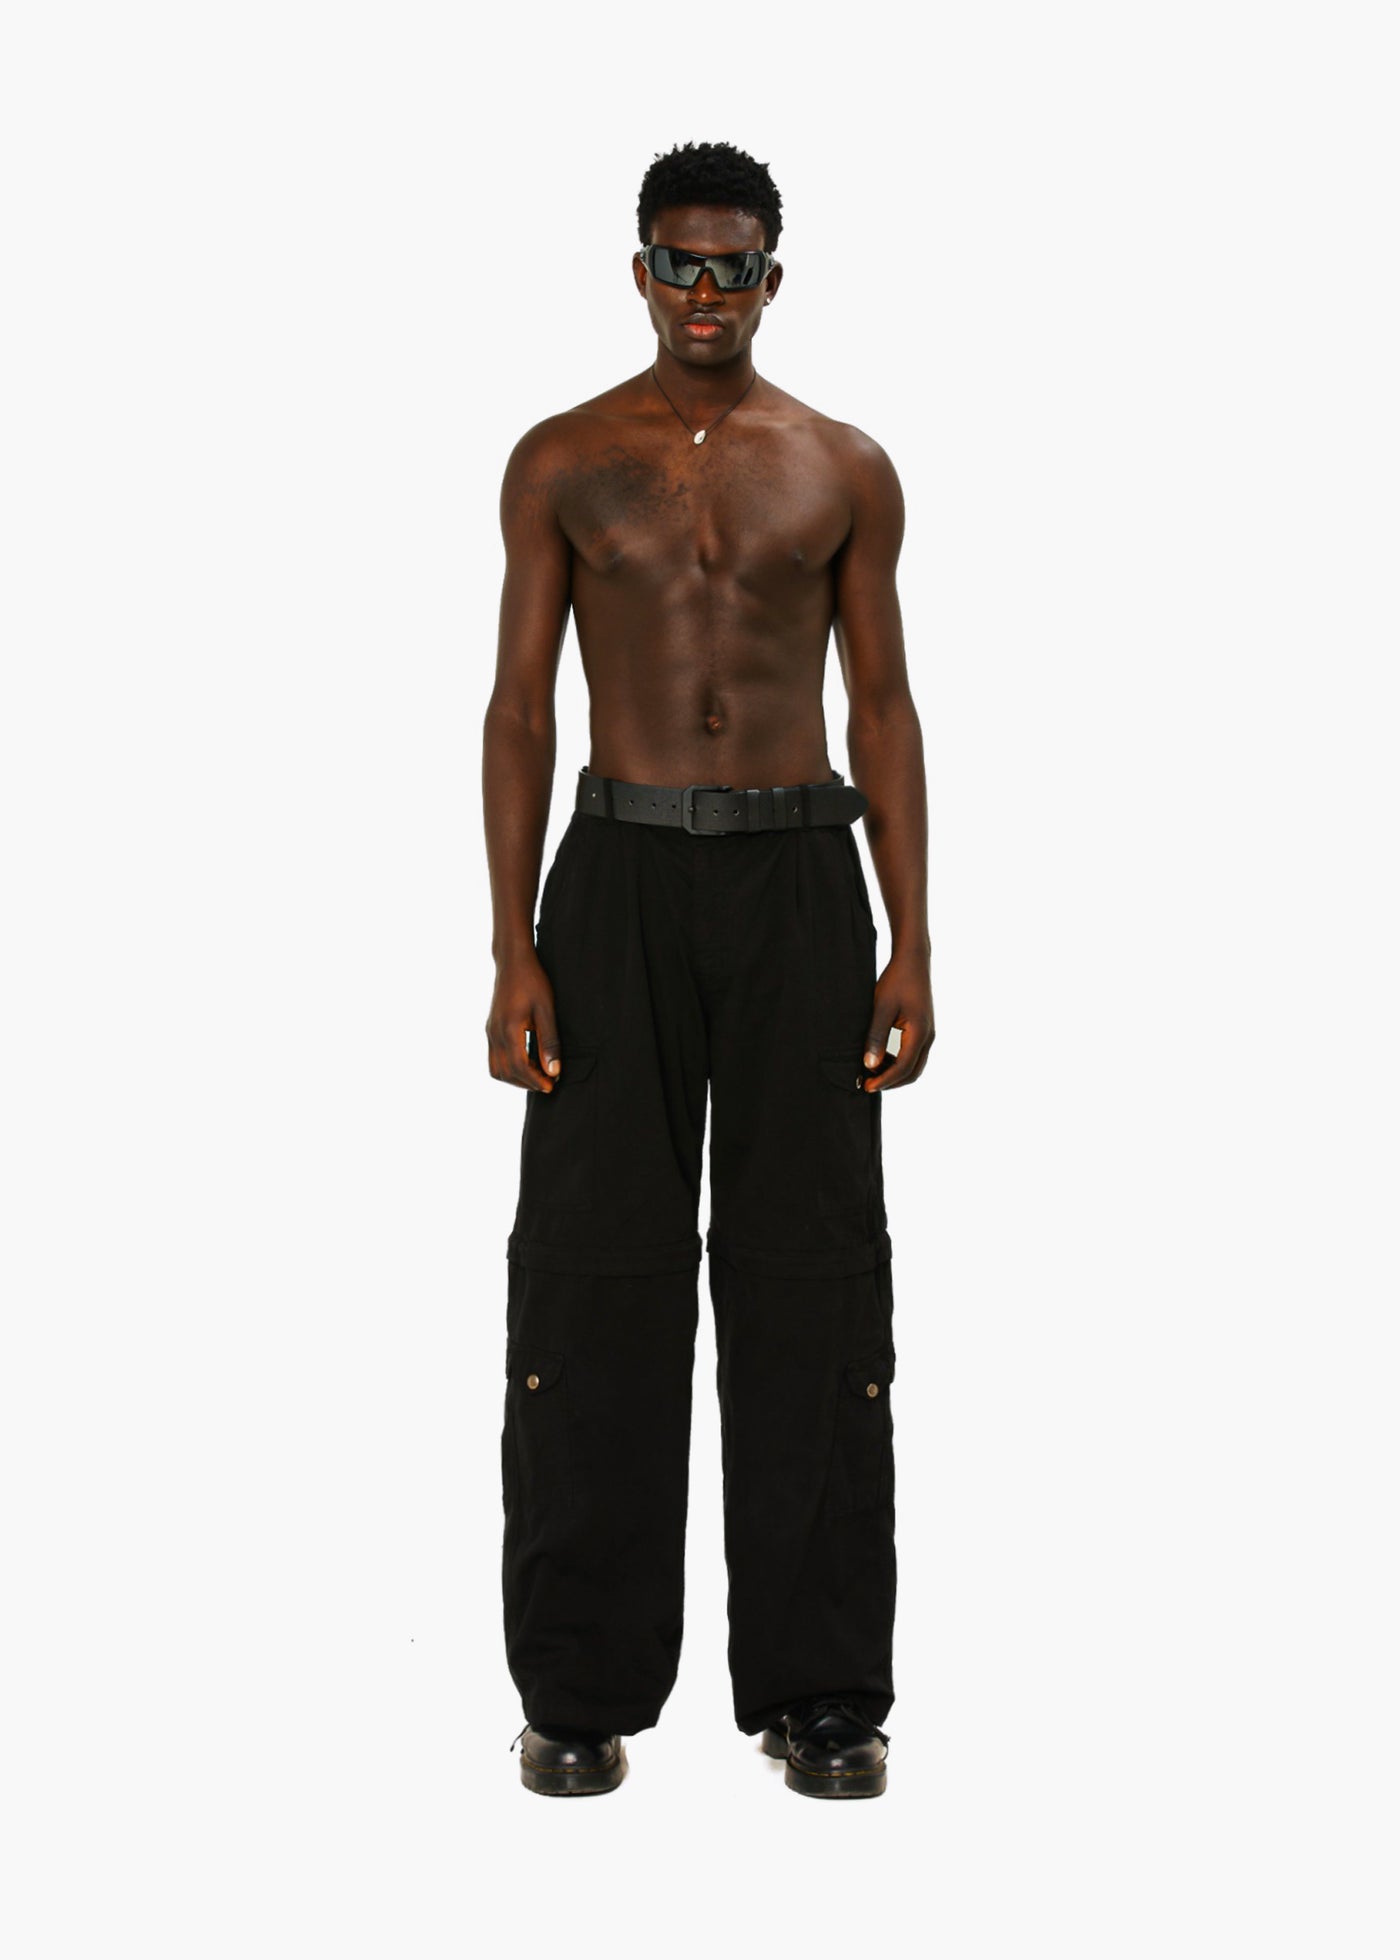 Khaki cargo pants/shorts